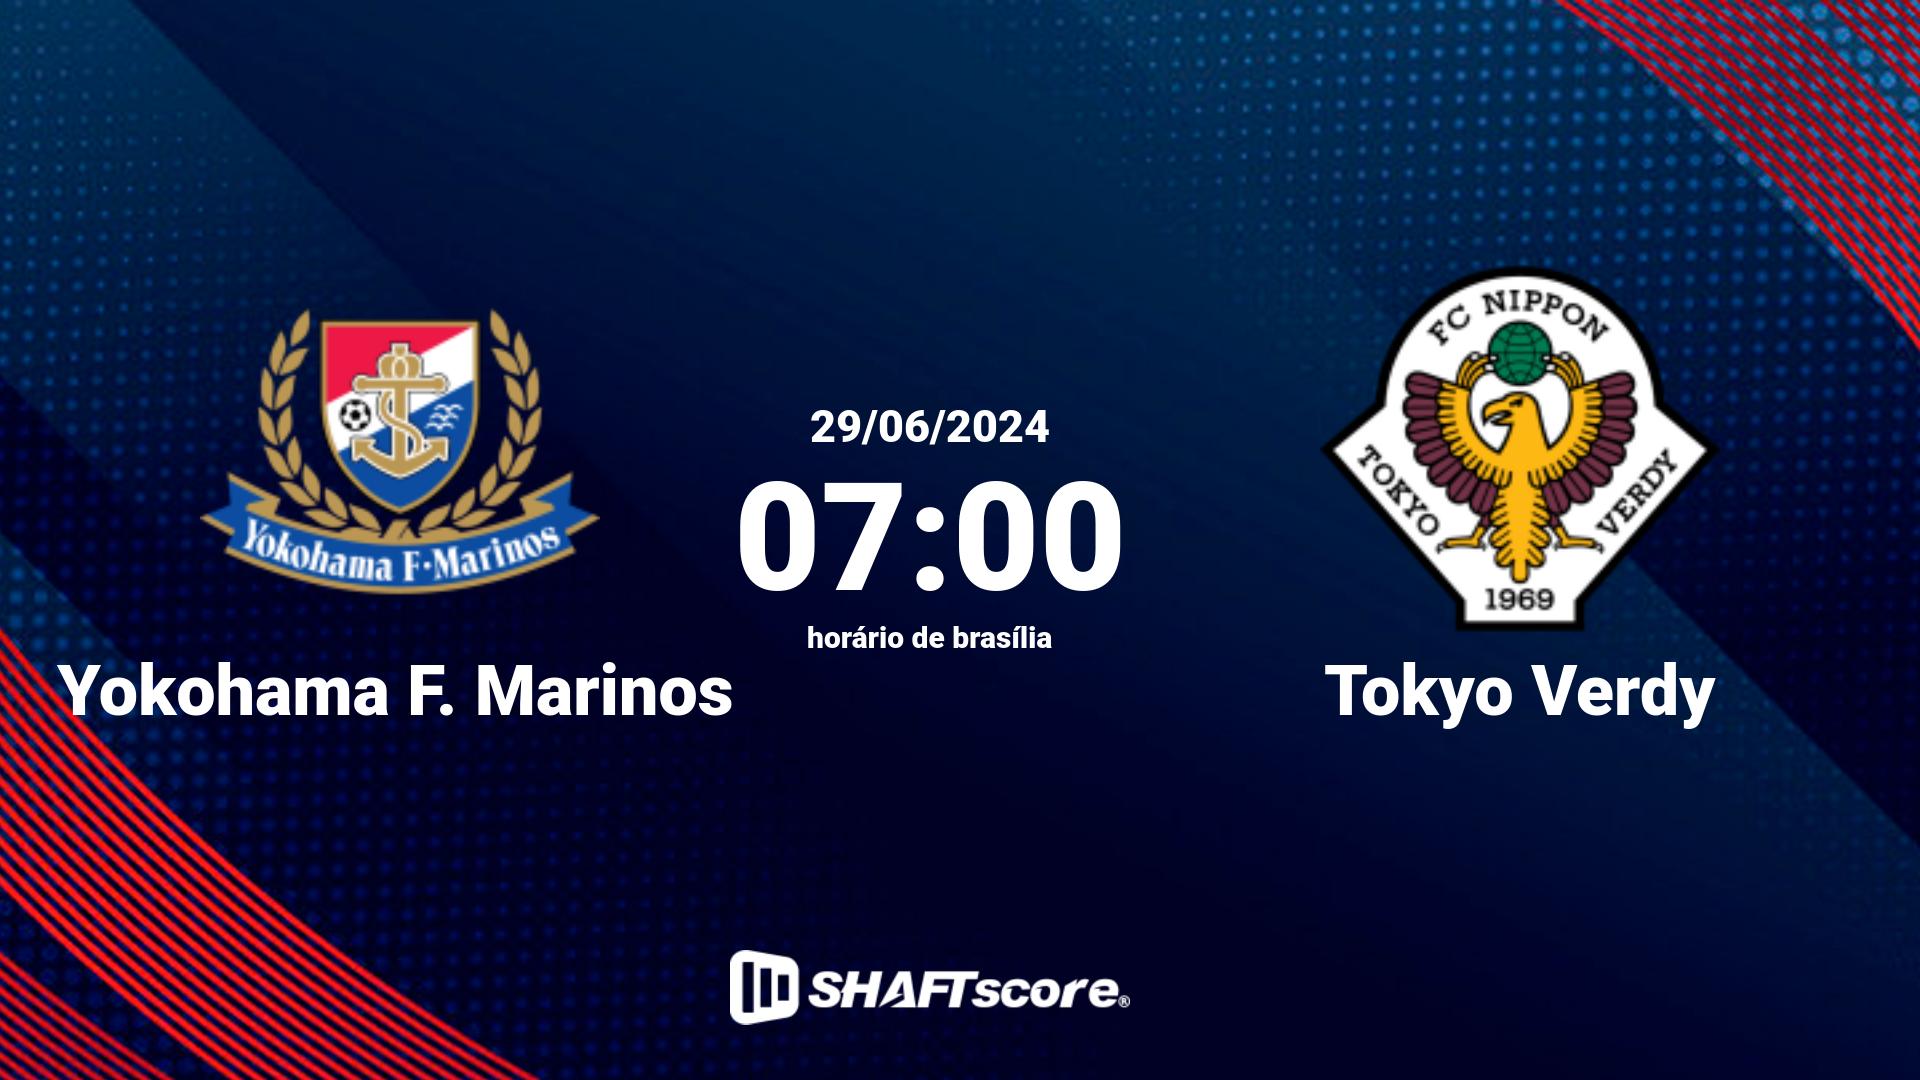 Estatísticas do jogo Yokohama F. Marinos vs Tokyo Verdy 29.06 07:00